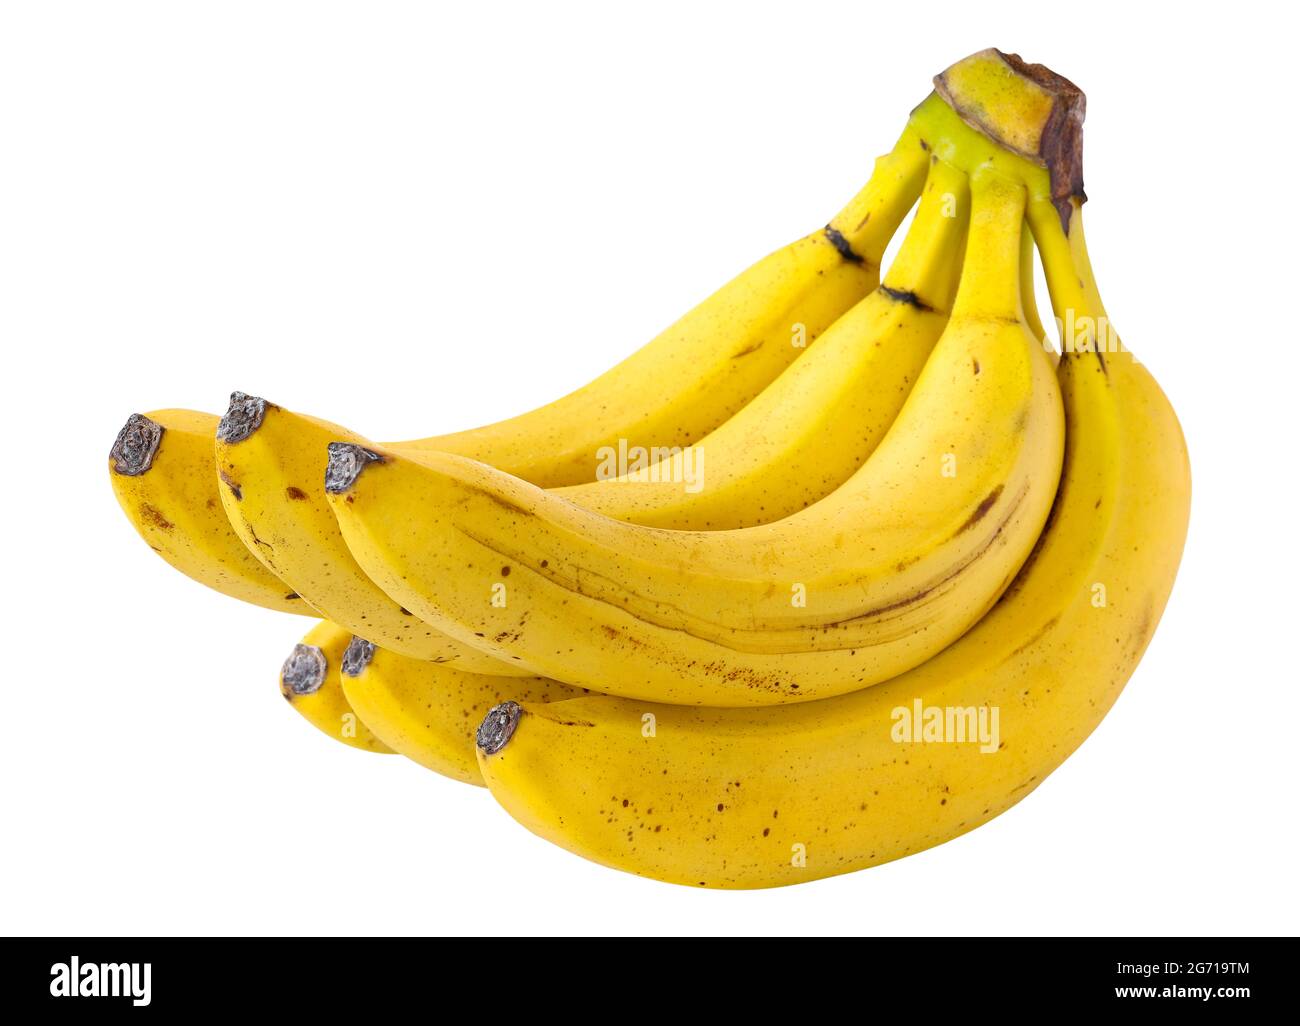 Ripe banana isolated on white background. Banana Clipping Path Stock Photo